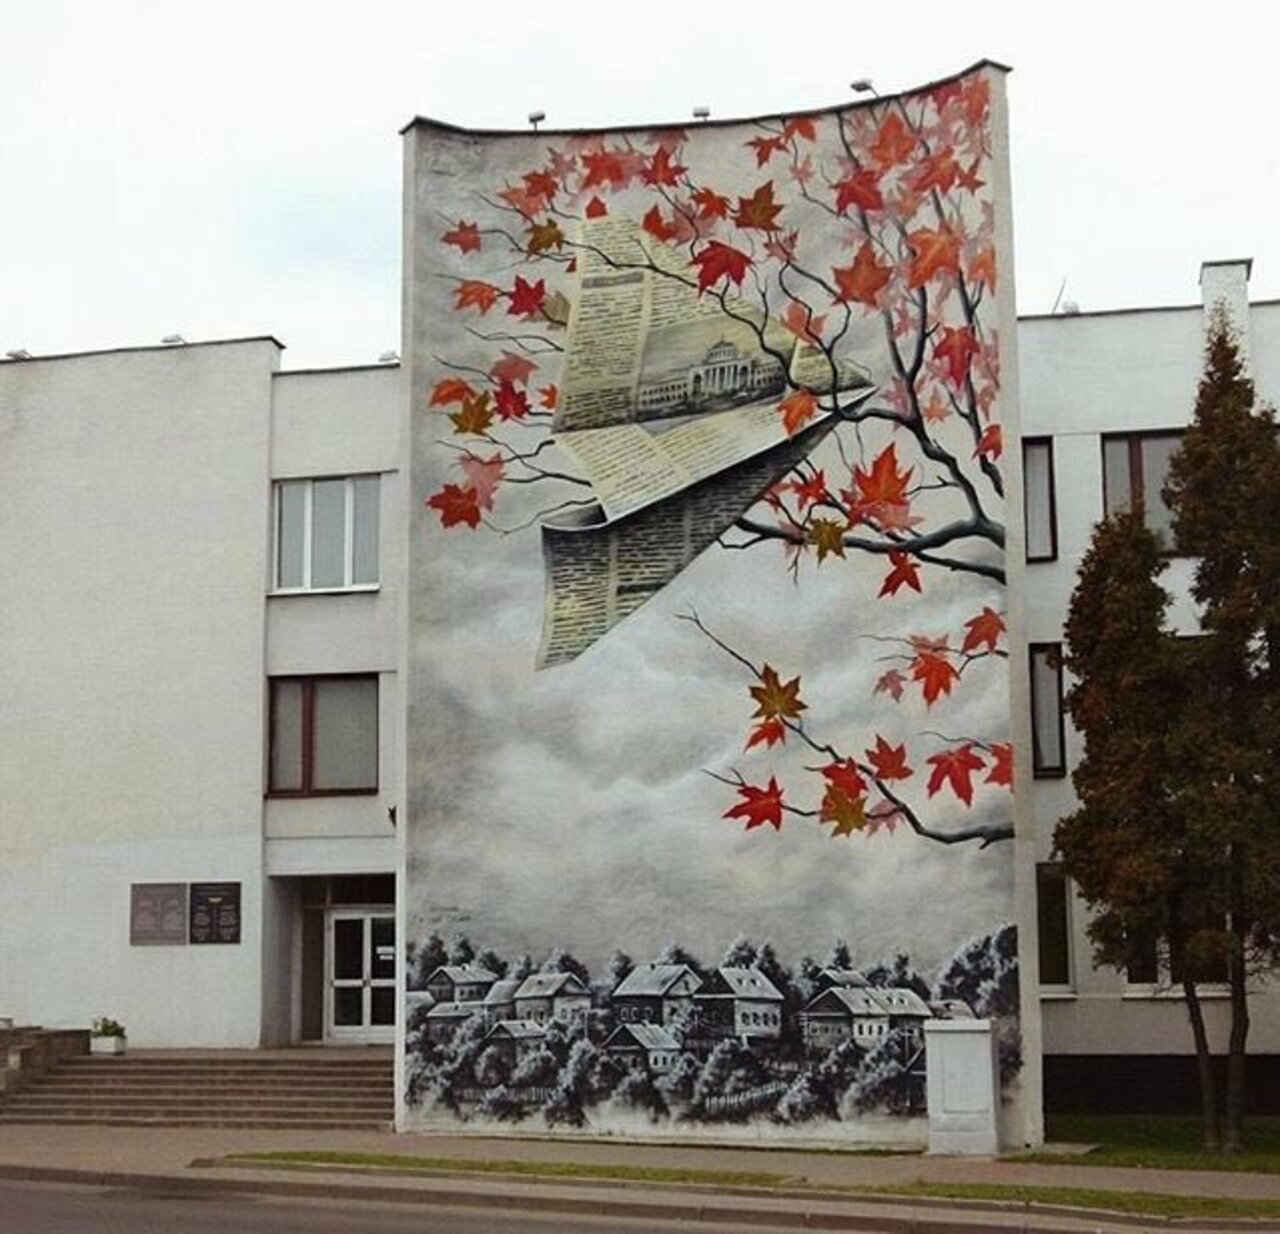 New Street Art by MUTUS in Belarus 

#art #graffiti #mural #streetart https://t.co/X0swDq21Iv